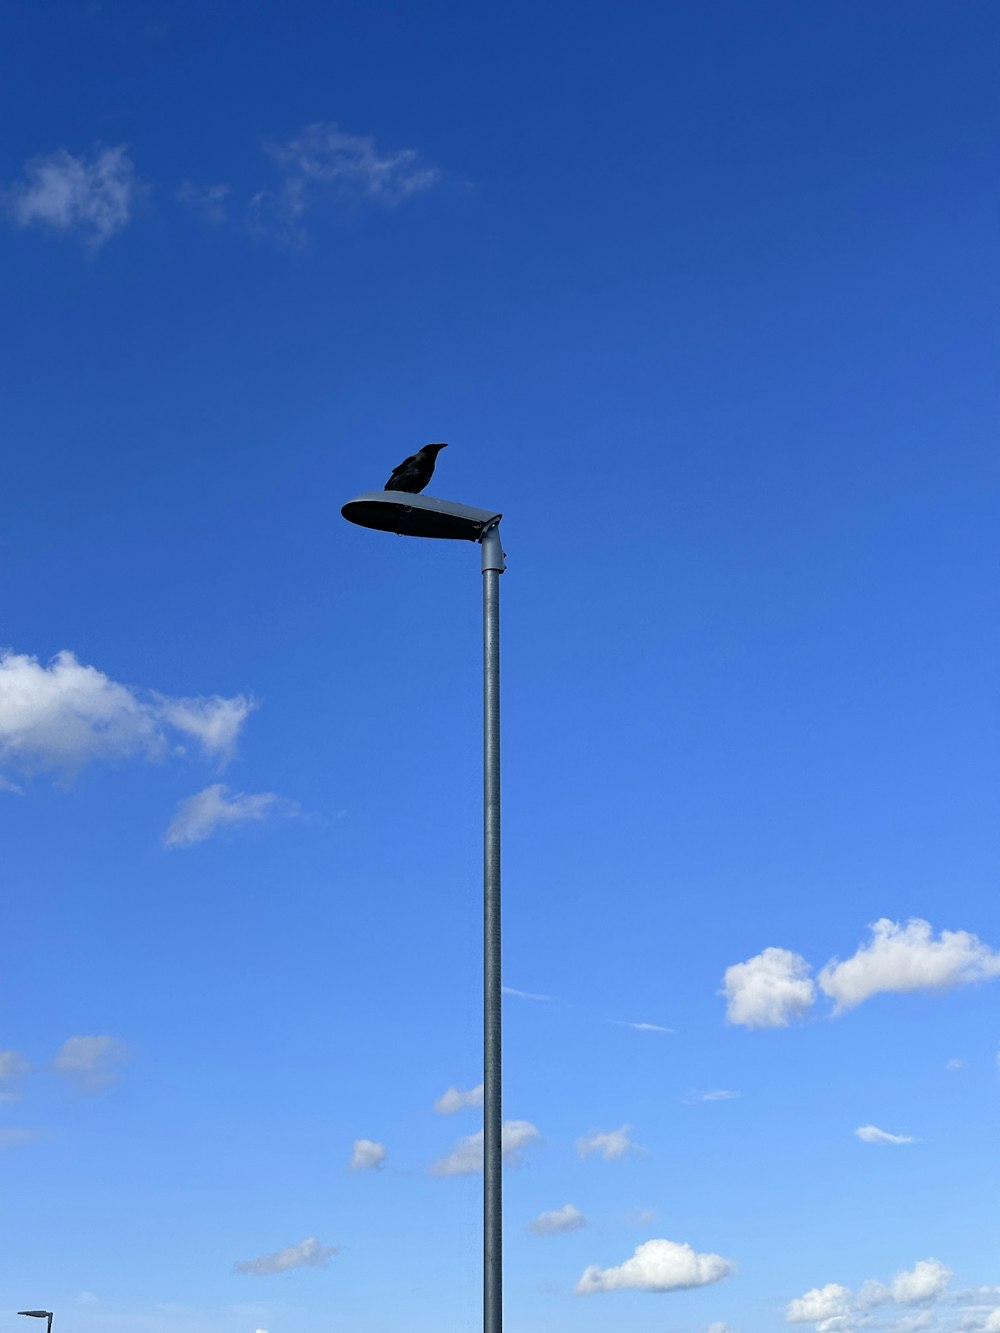 a black bird sitting on top of a light pole